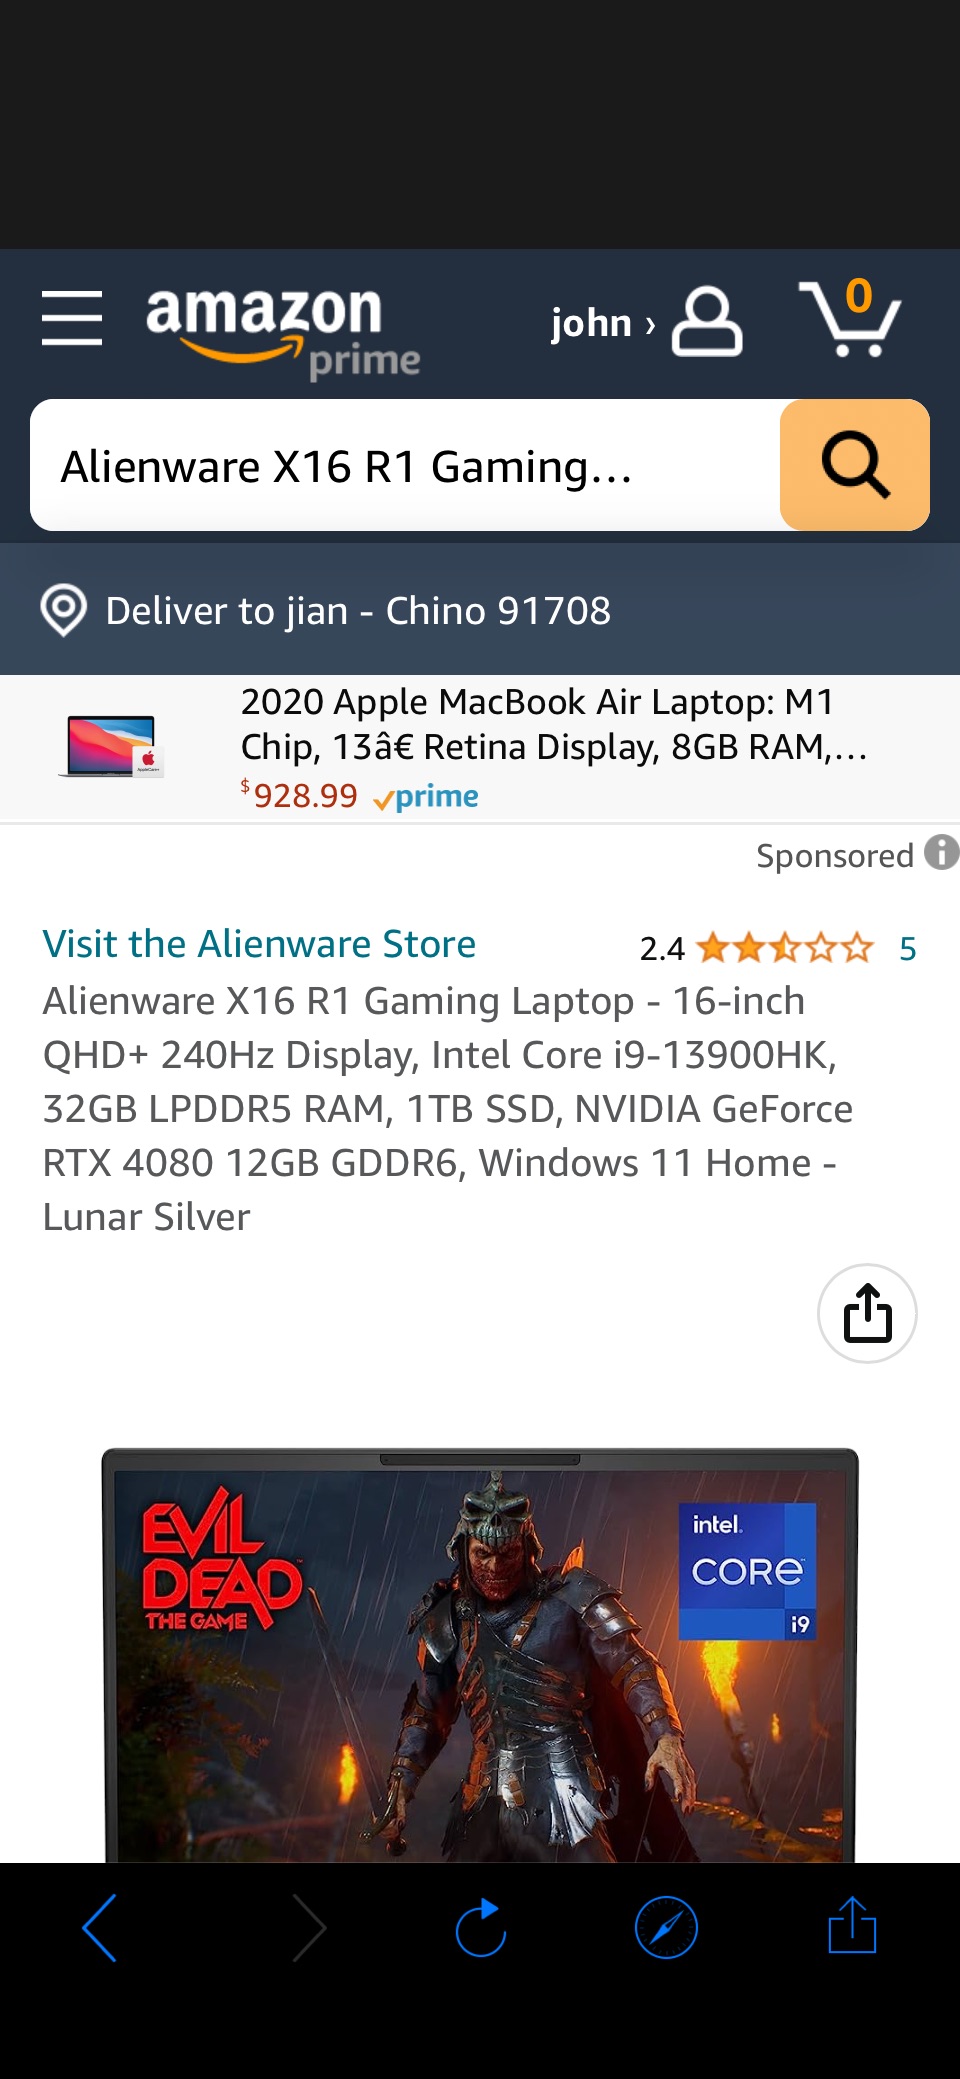 Amazon.com: Alienware X16 R1 Gaming Laptop - 16-inch QHD+ 240Hz Display, Intel Core i9-13900HK, 32GB LPDDR5 RAM, 1TB SSD, NVIDIA GeForce RTX 4080 12GB GDDR6, Windows 11 Home - Lunar Silver : Electronics